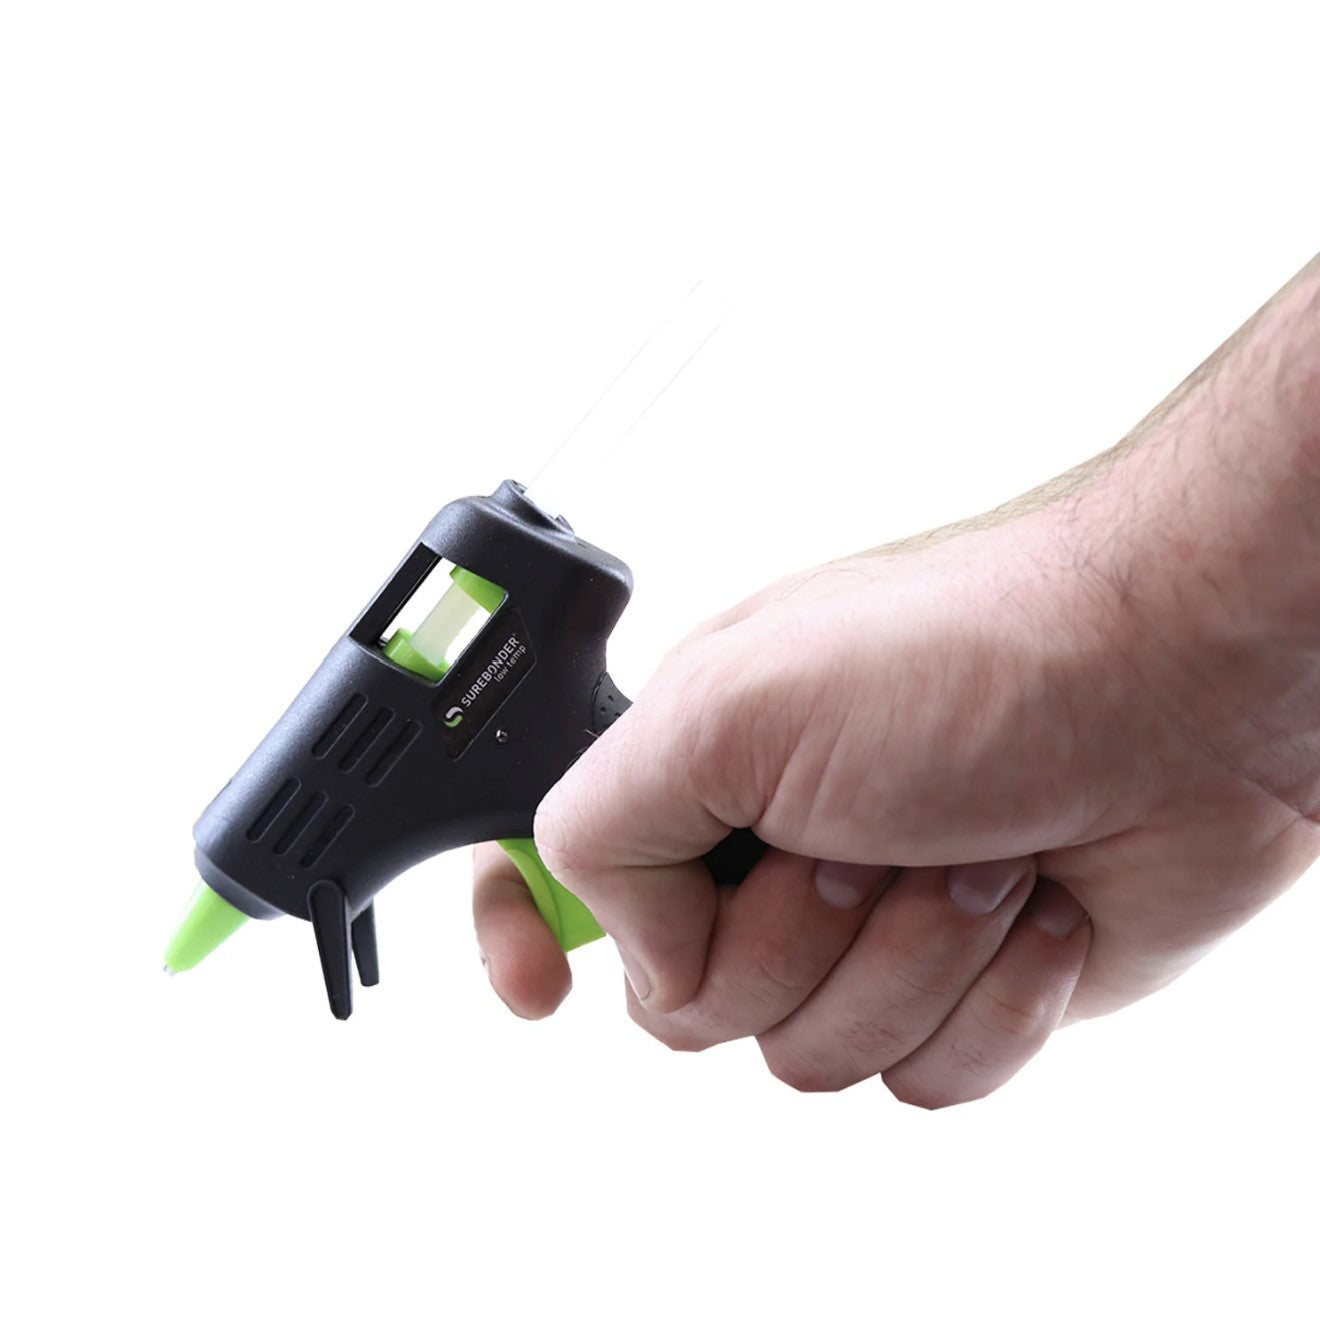 Mini Size Low Temp Glue Gun, 10 Watt (Ref. LT-160), Black Colored Essentials Series by Surebonder®